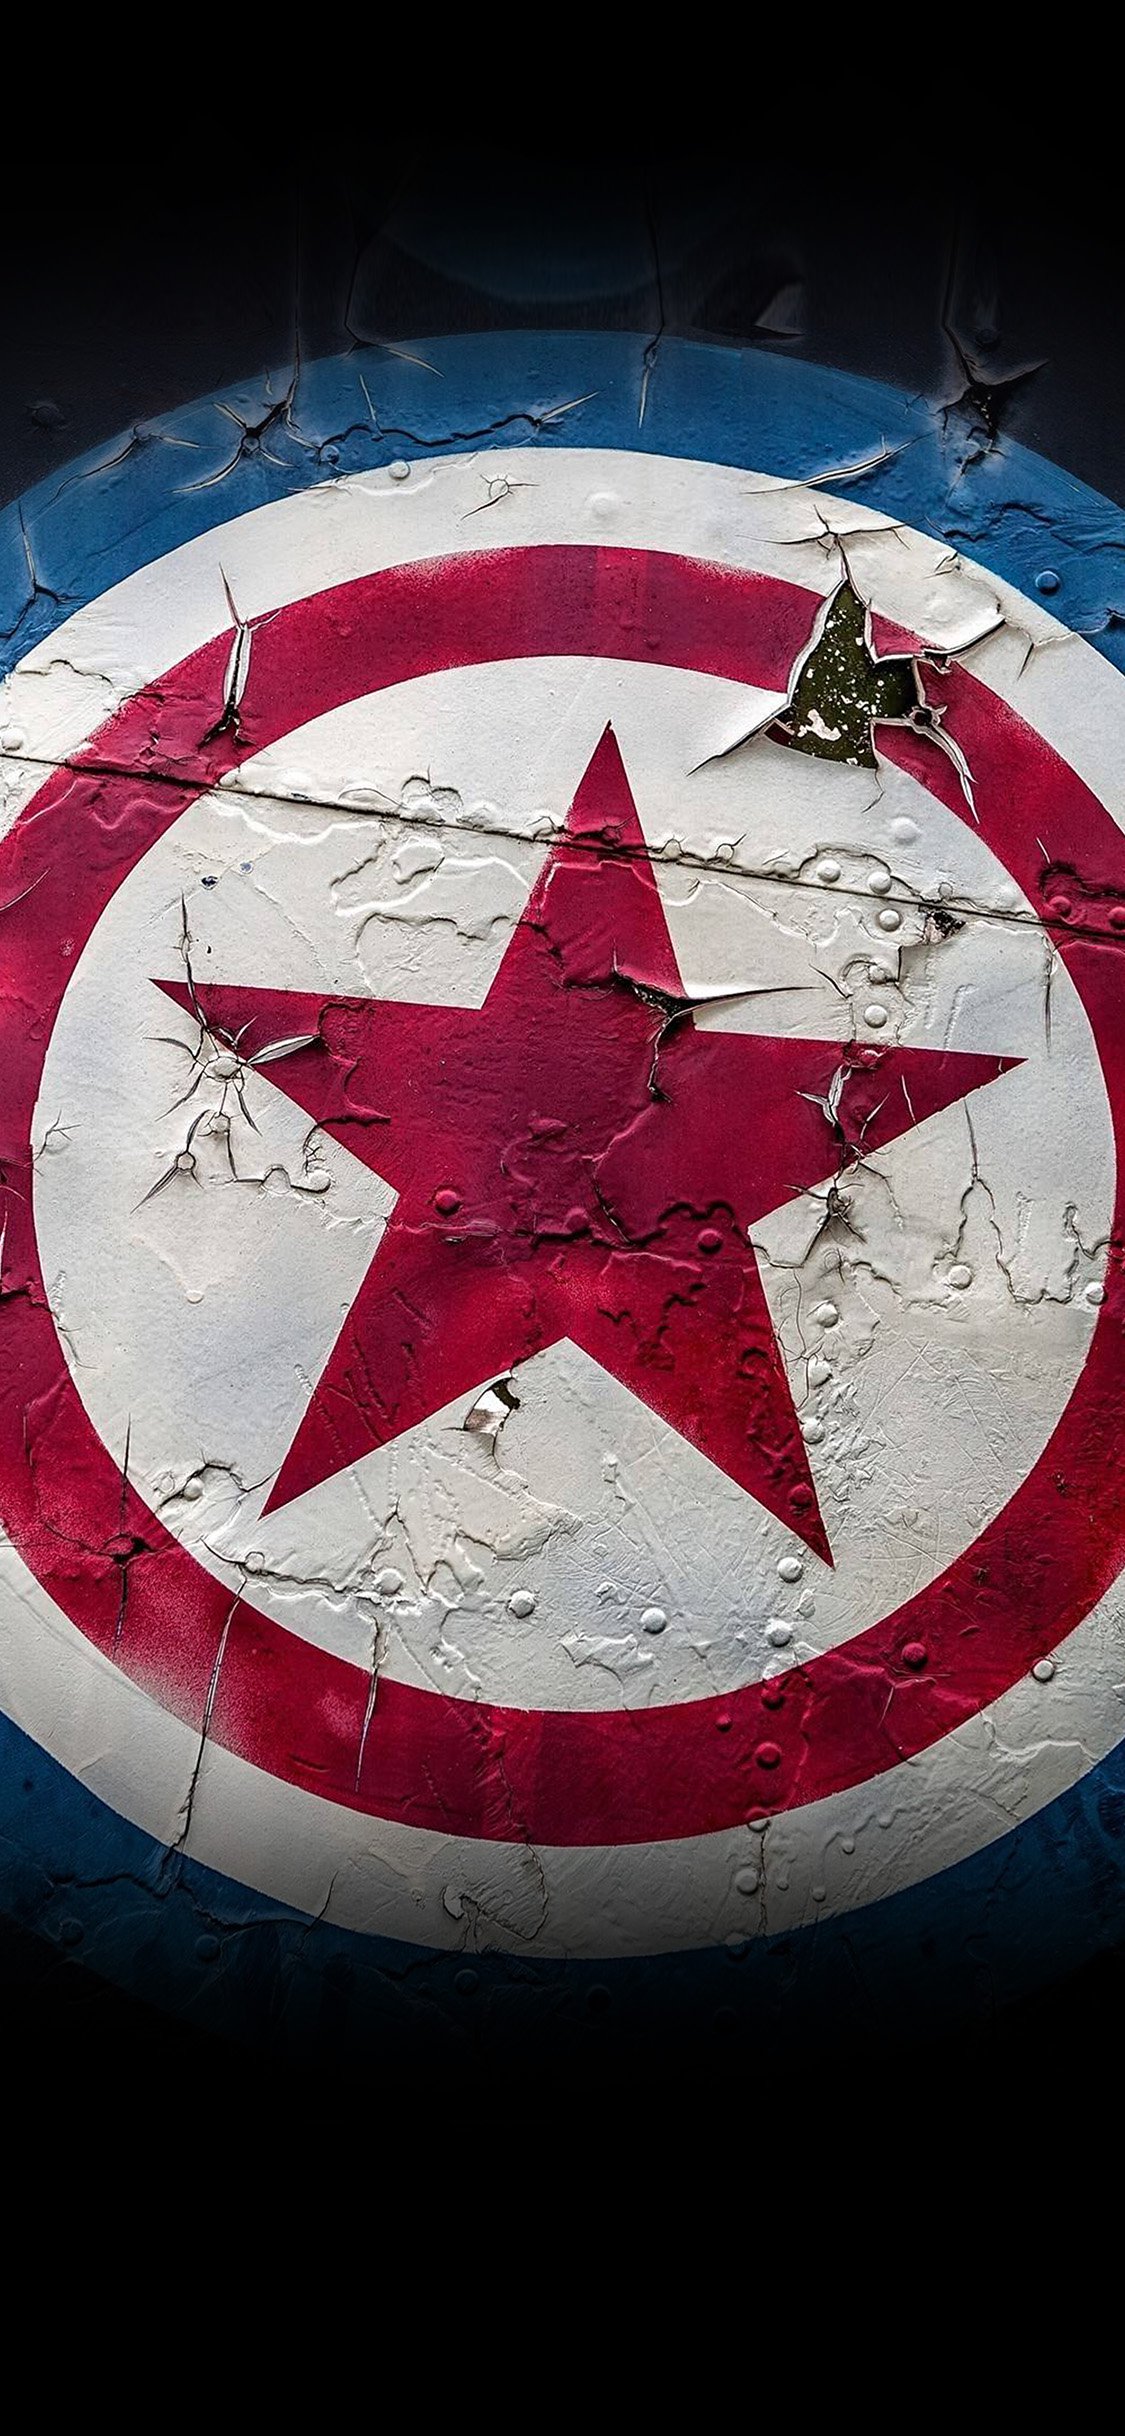 Captain america marvel hero iPhone wallpaper 